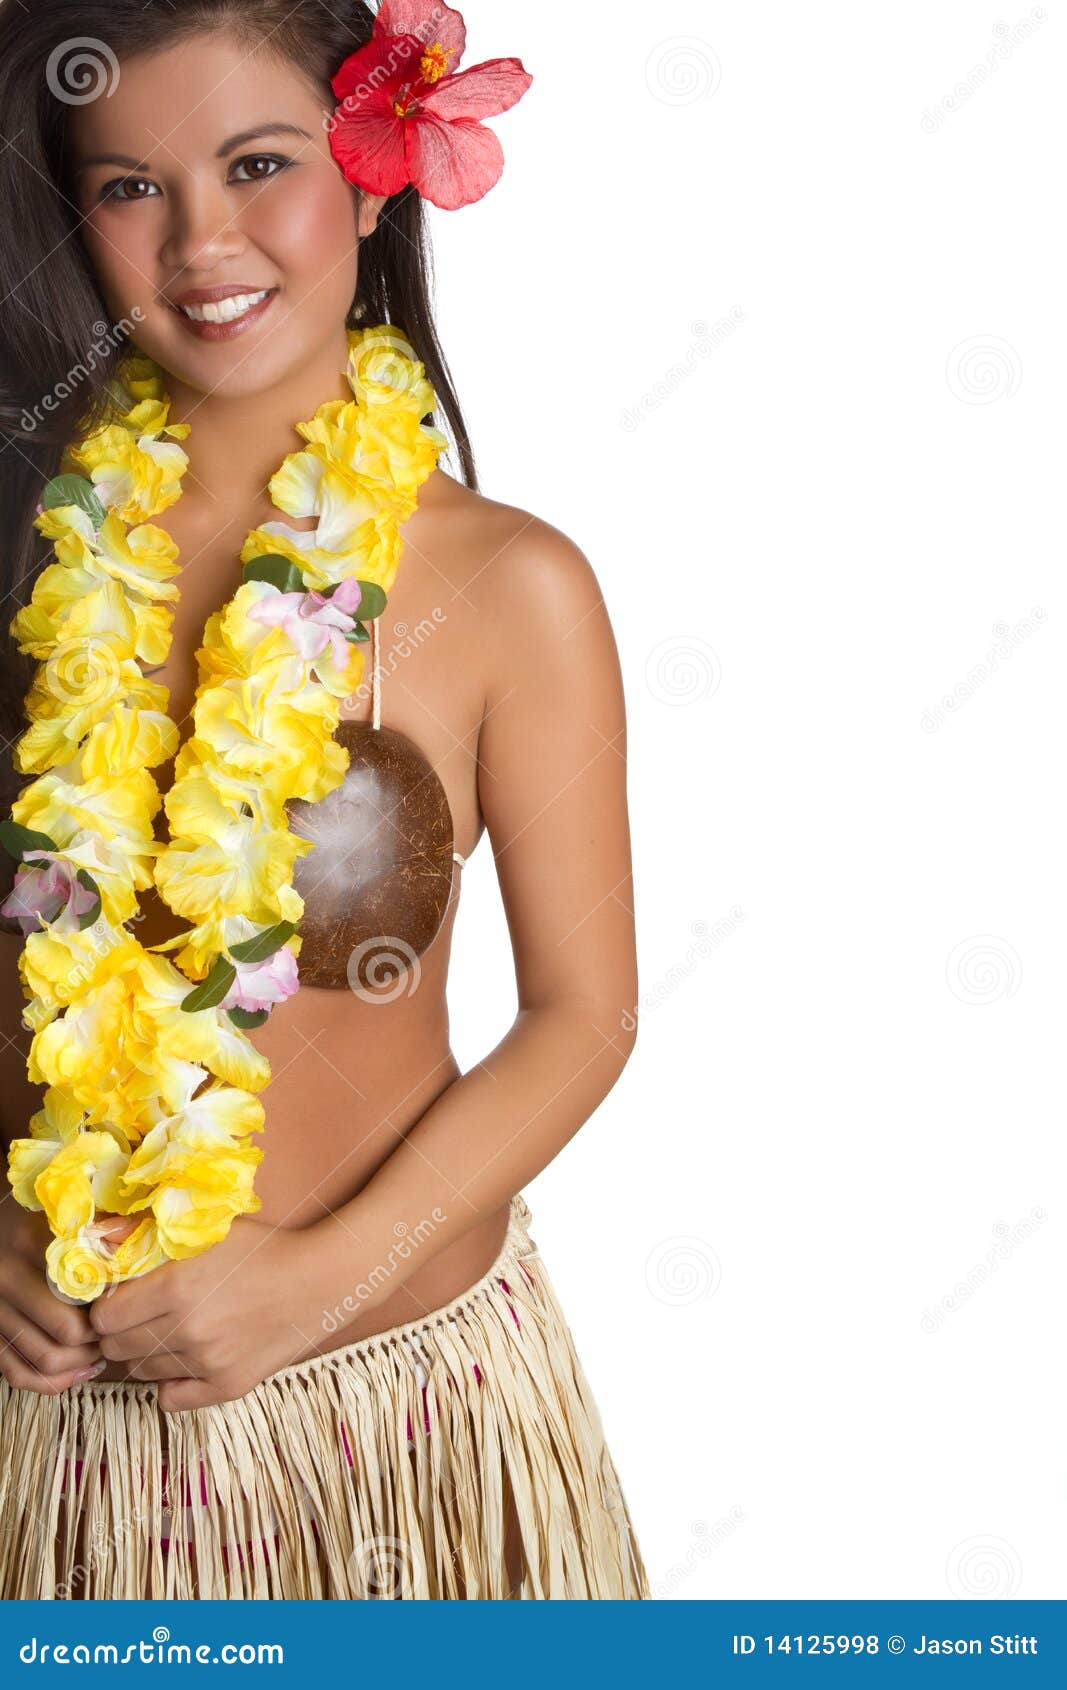 Female Hawaiian Hula dancer wearing coconut bikini, yellow lei